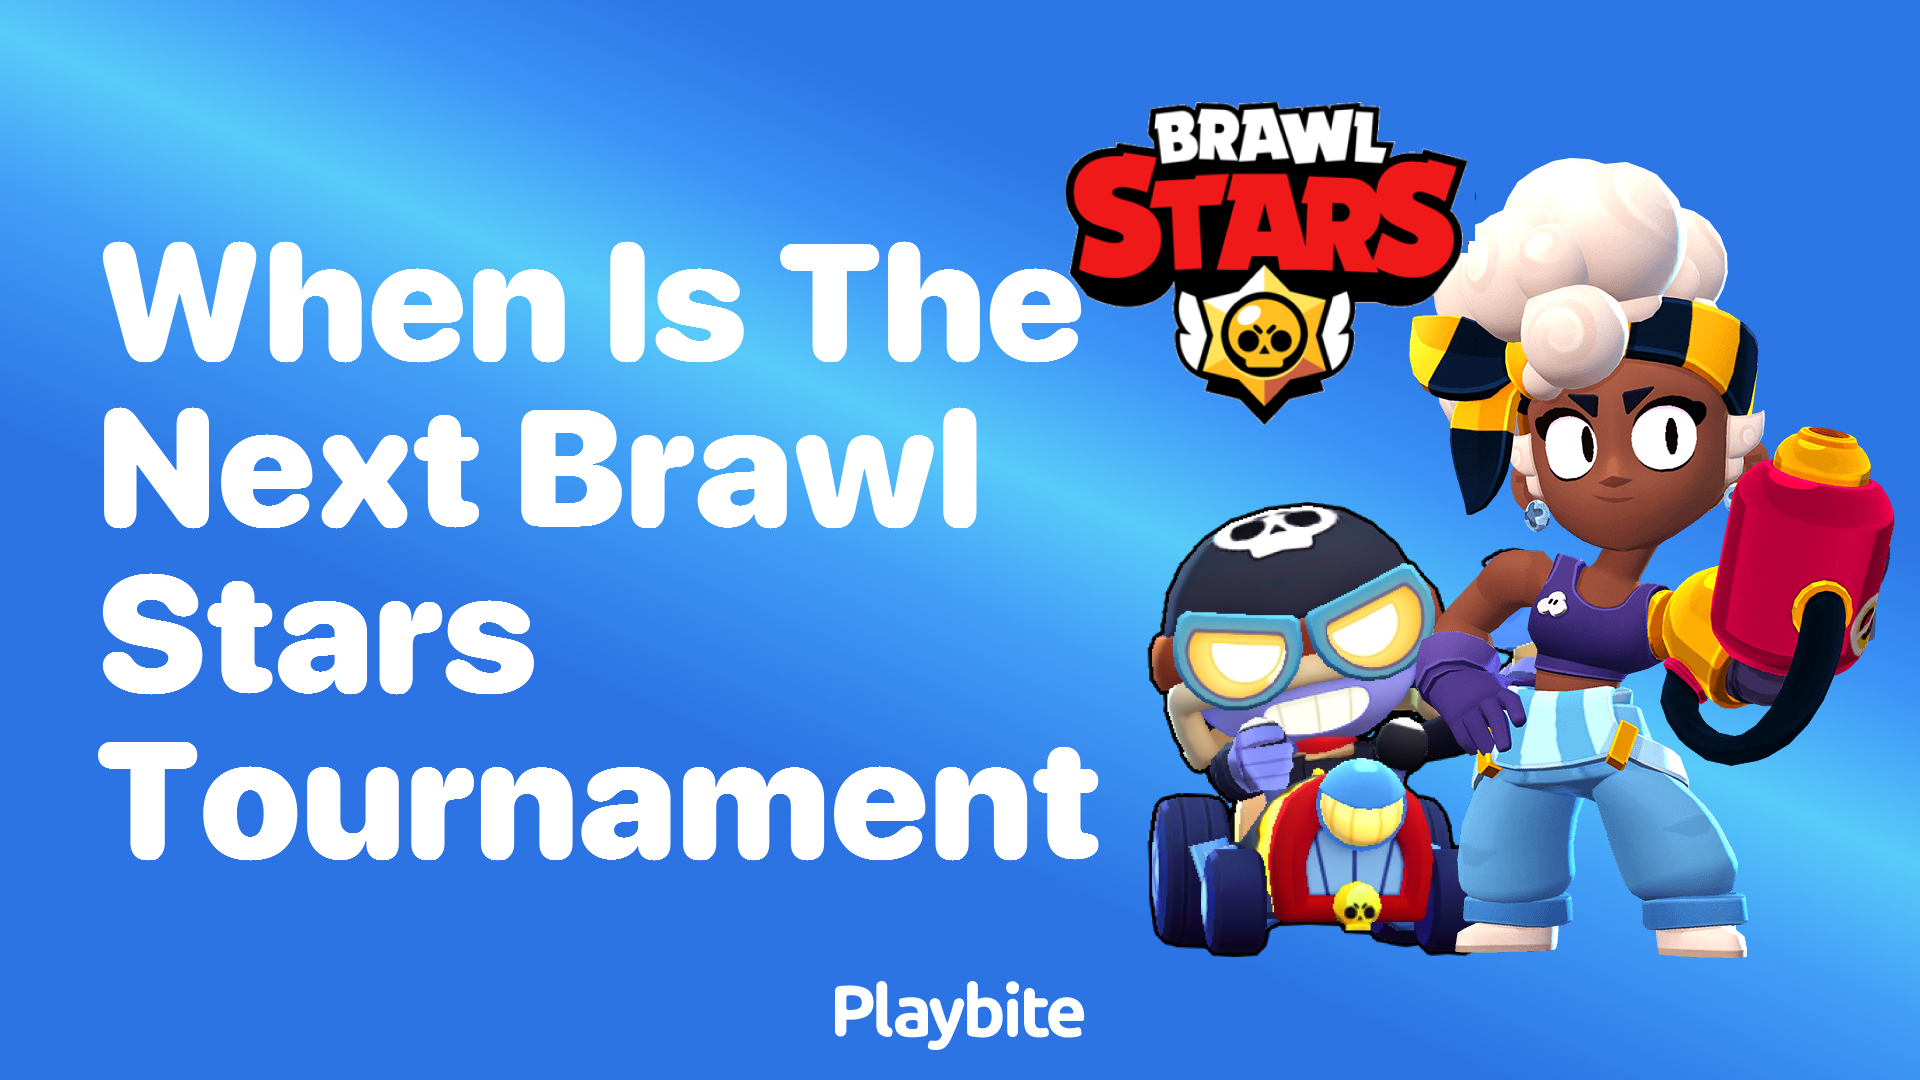 When Is the Next Brawl Stars Tournament?